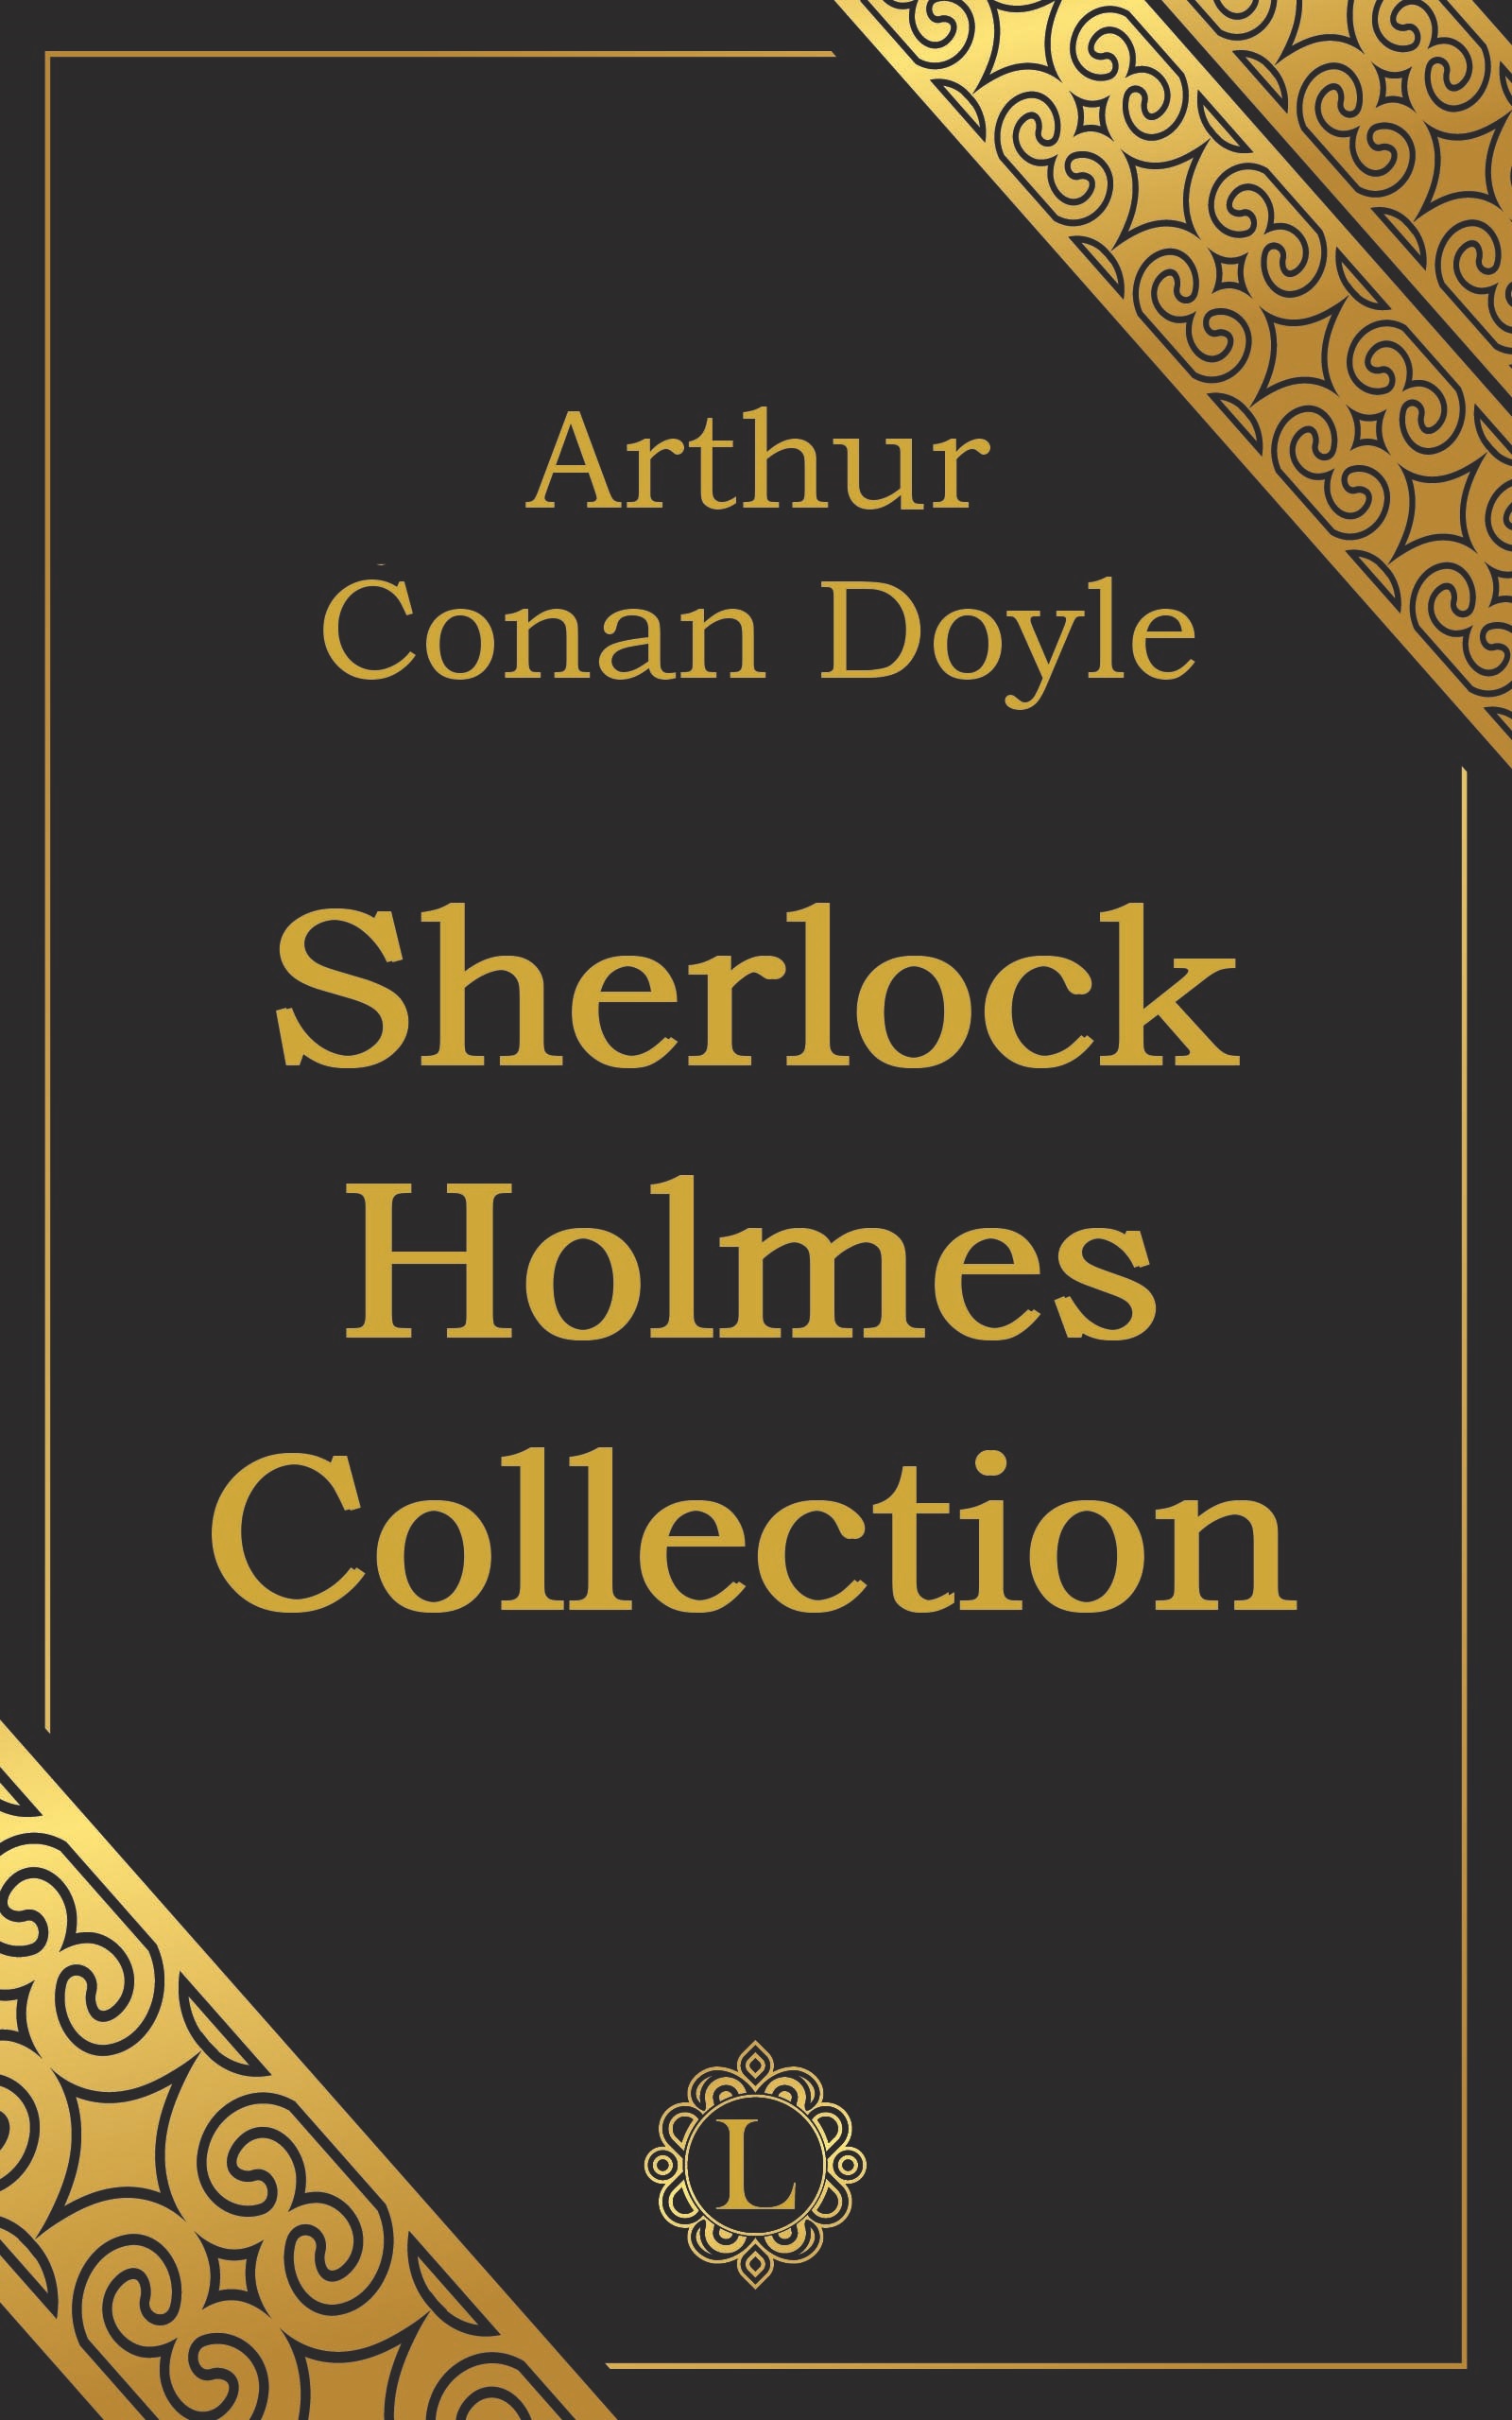 FREE: Sherlock Holmes Collection by Arthur Conan Doyle